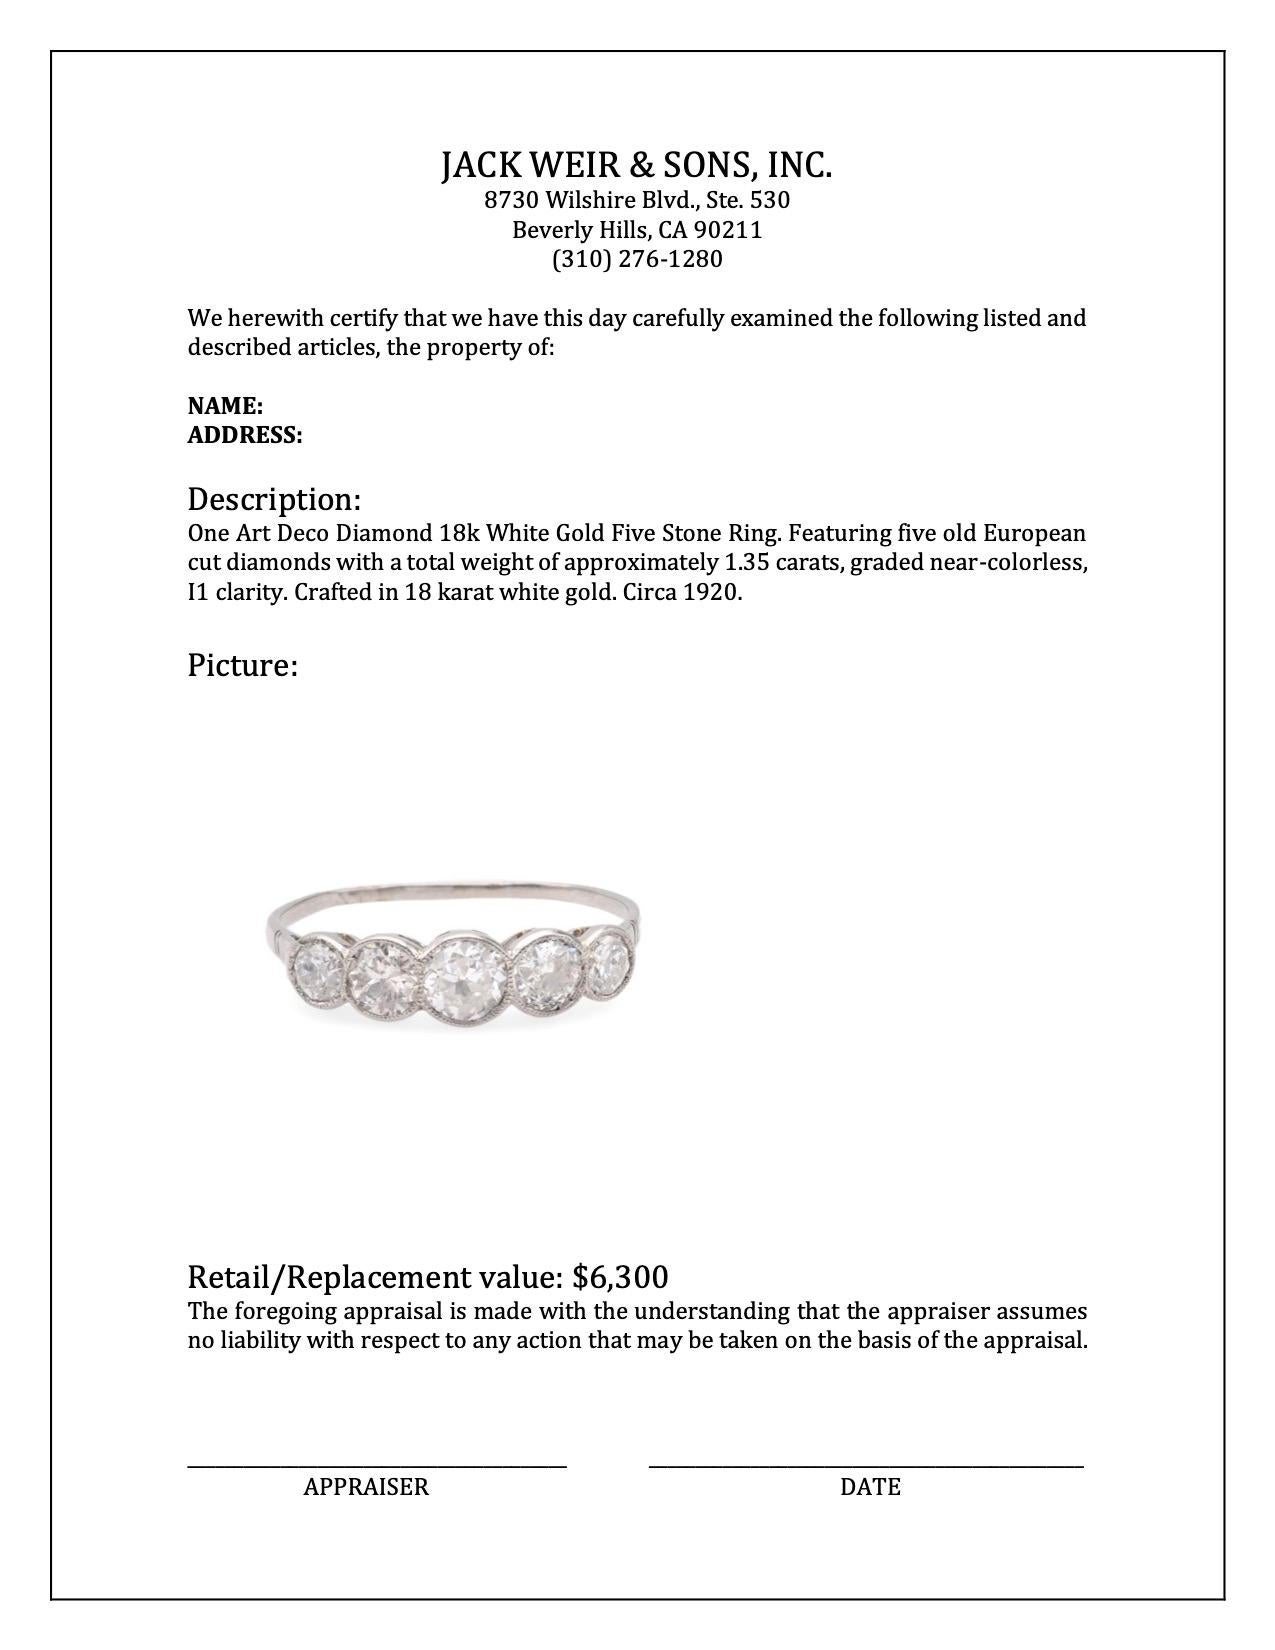 Women's or Men's Art Deco Diamond 18k White Gold Five Stone Ring For Sale